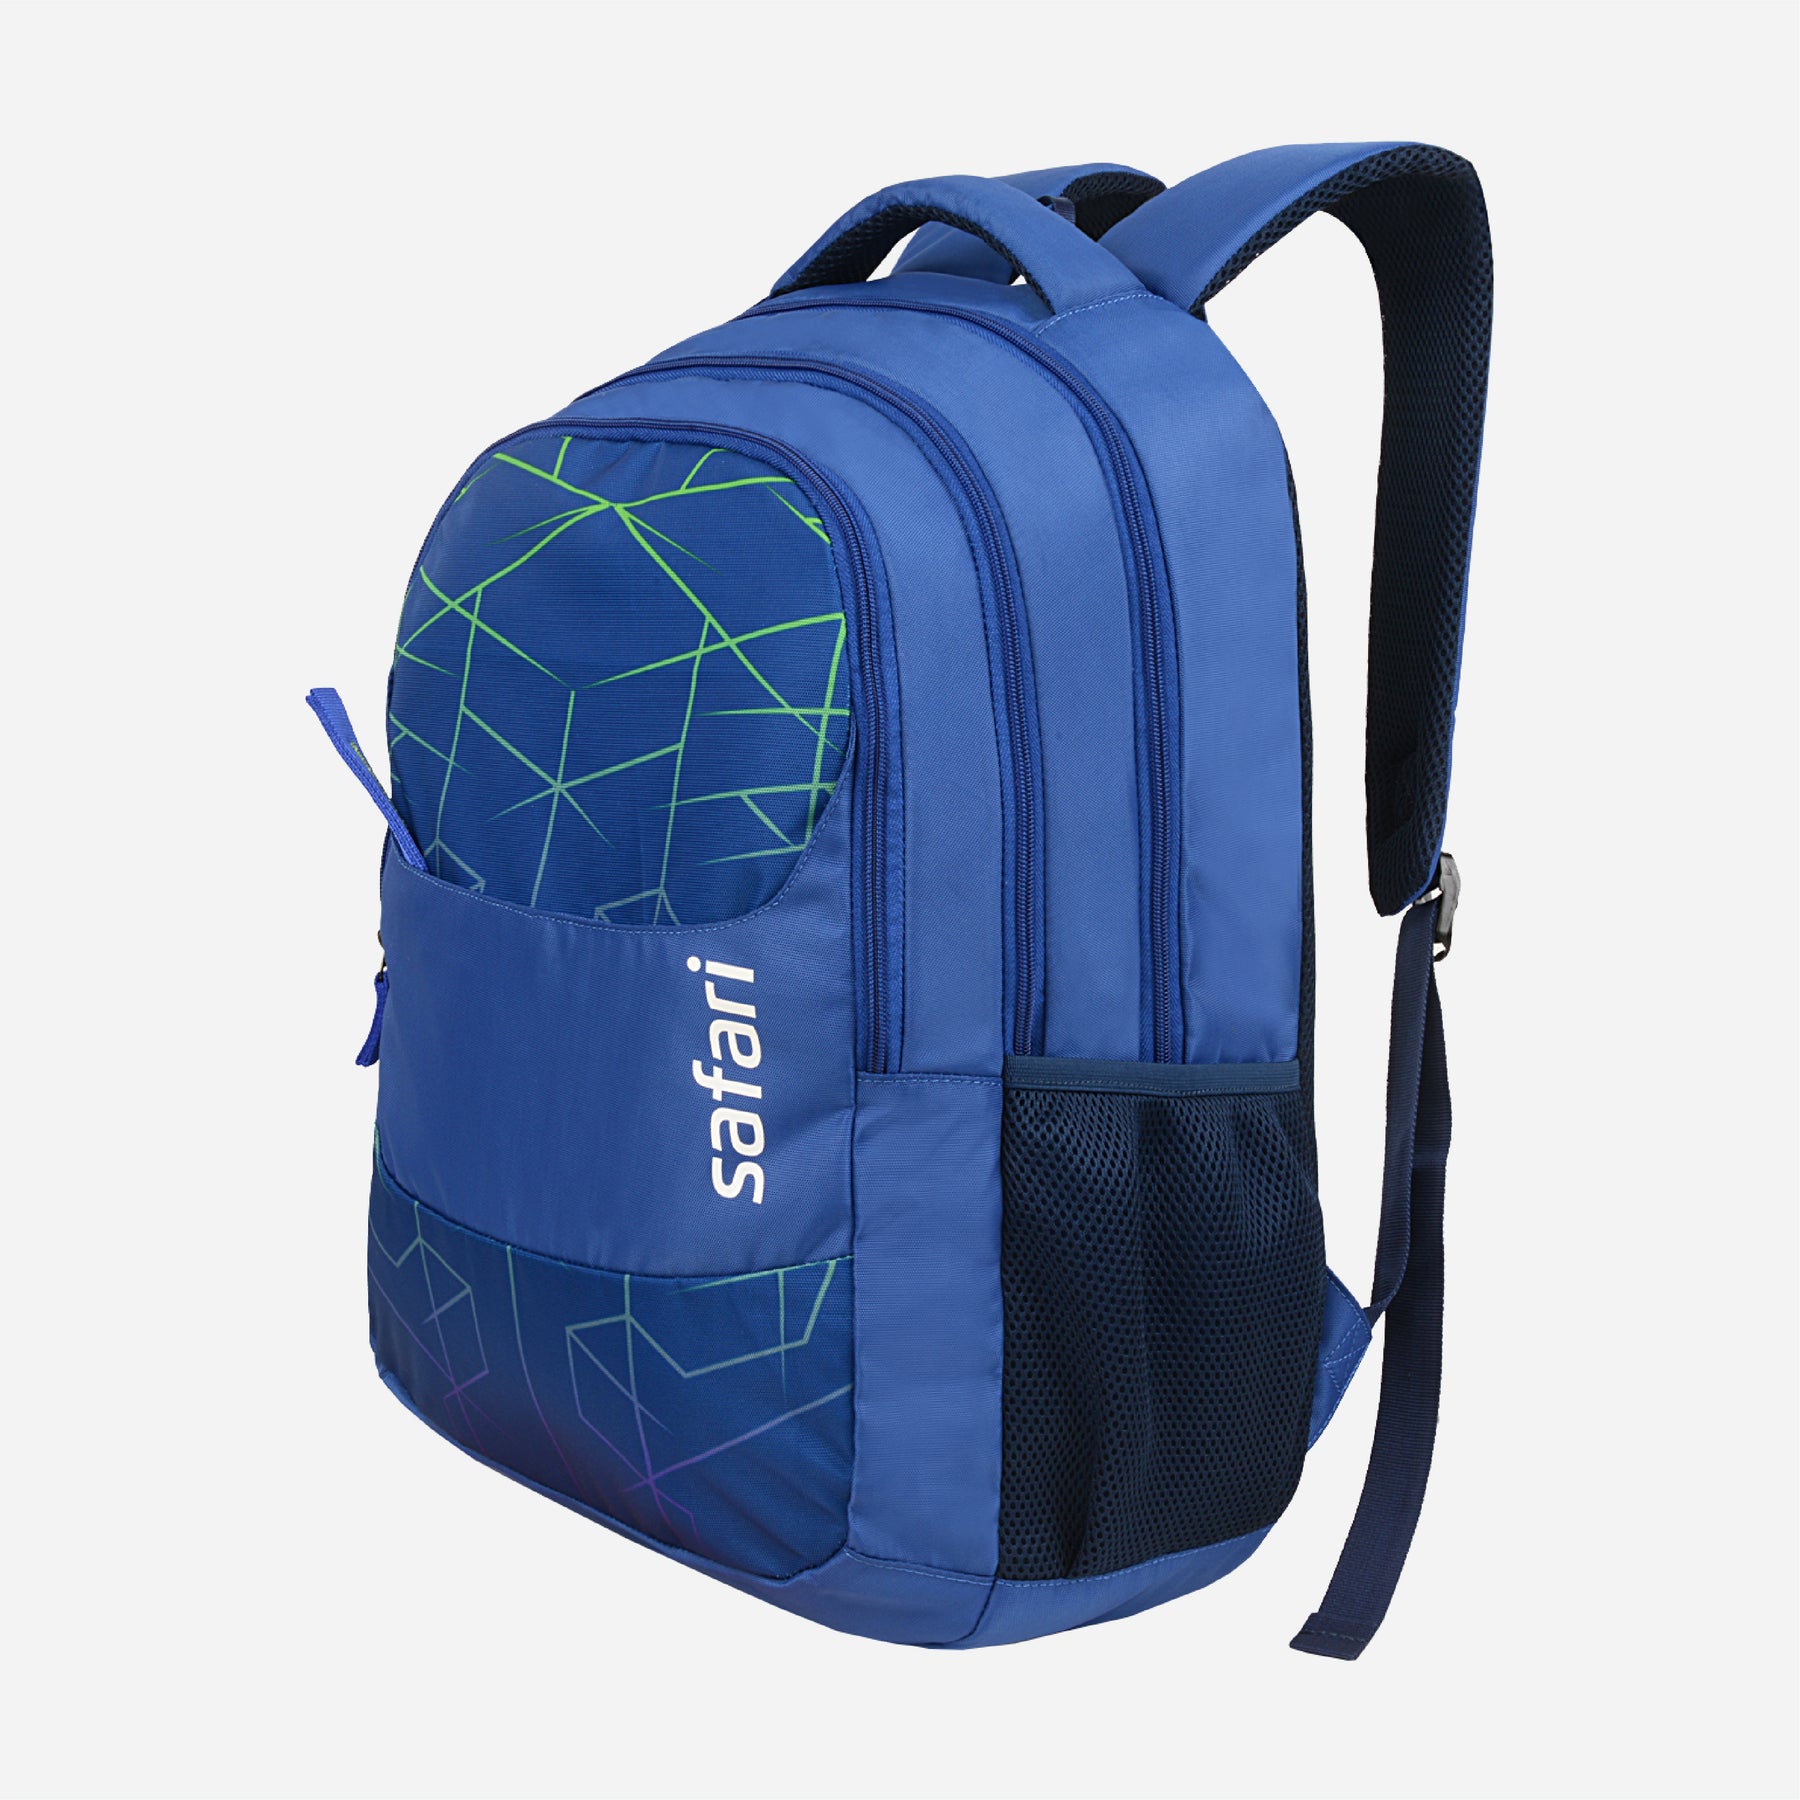 HiTech Black Colour School BackpackCollege Bag